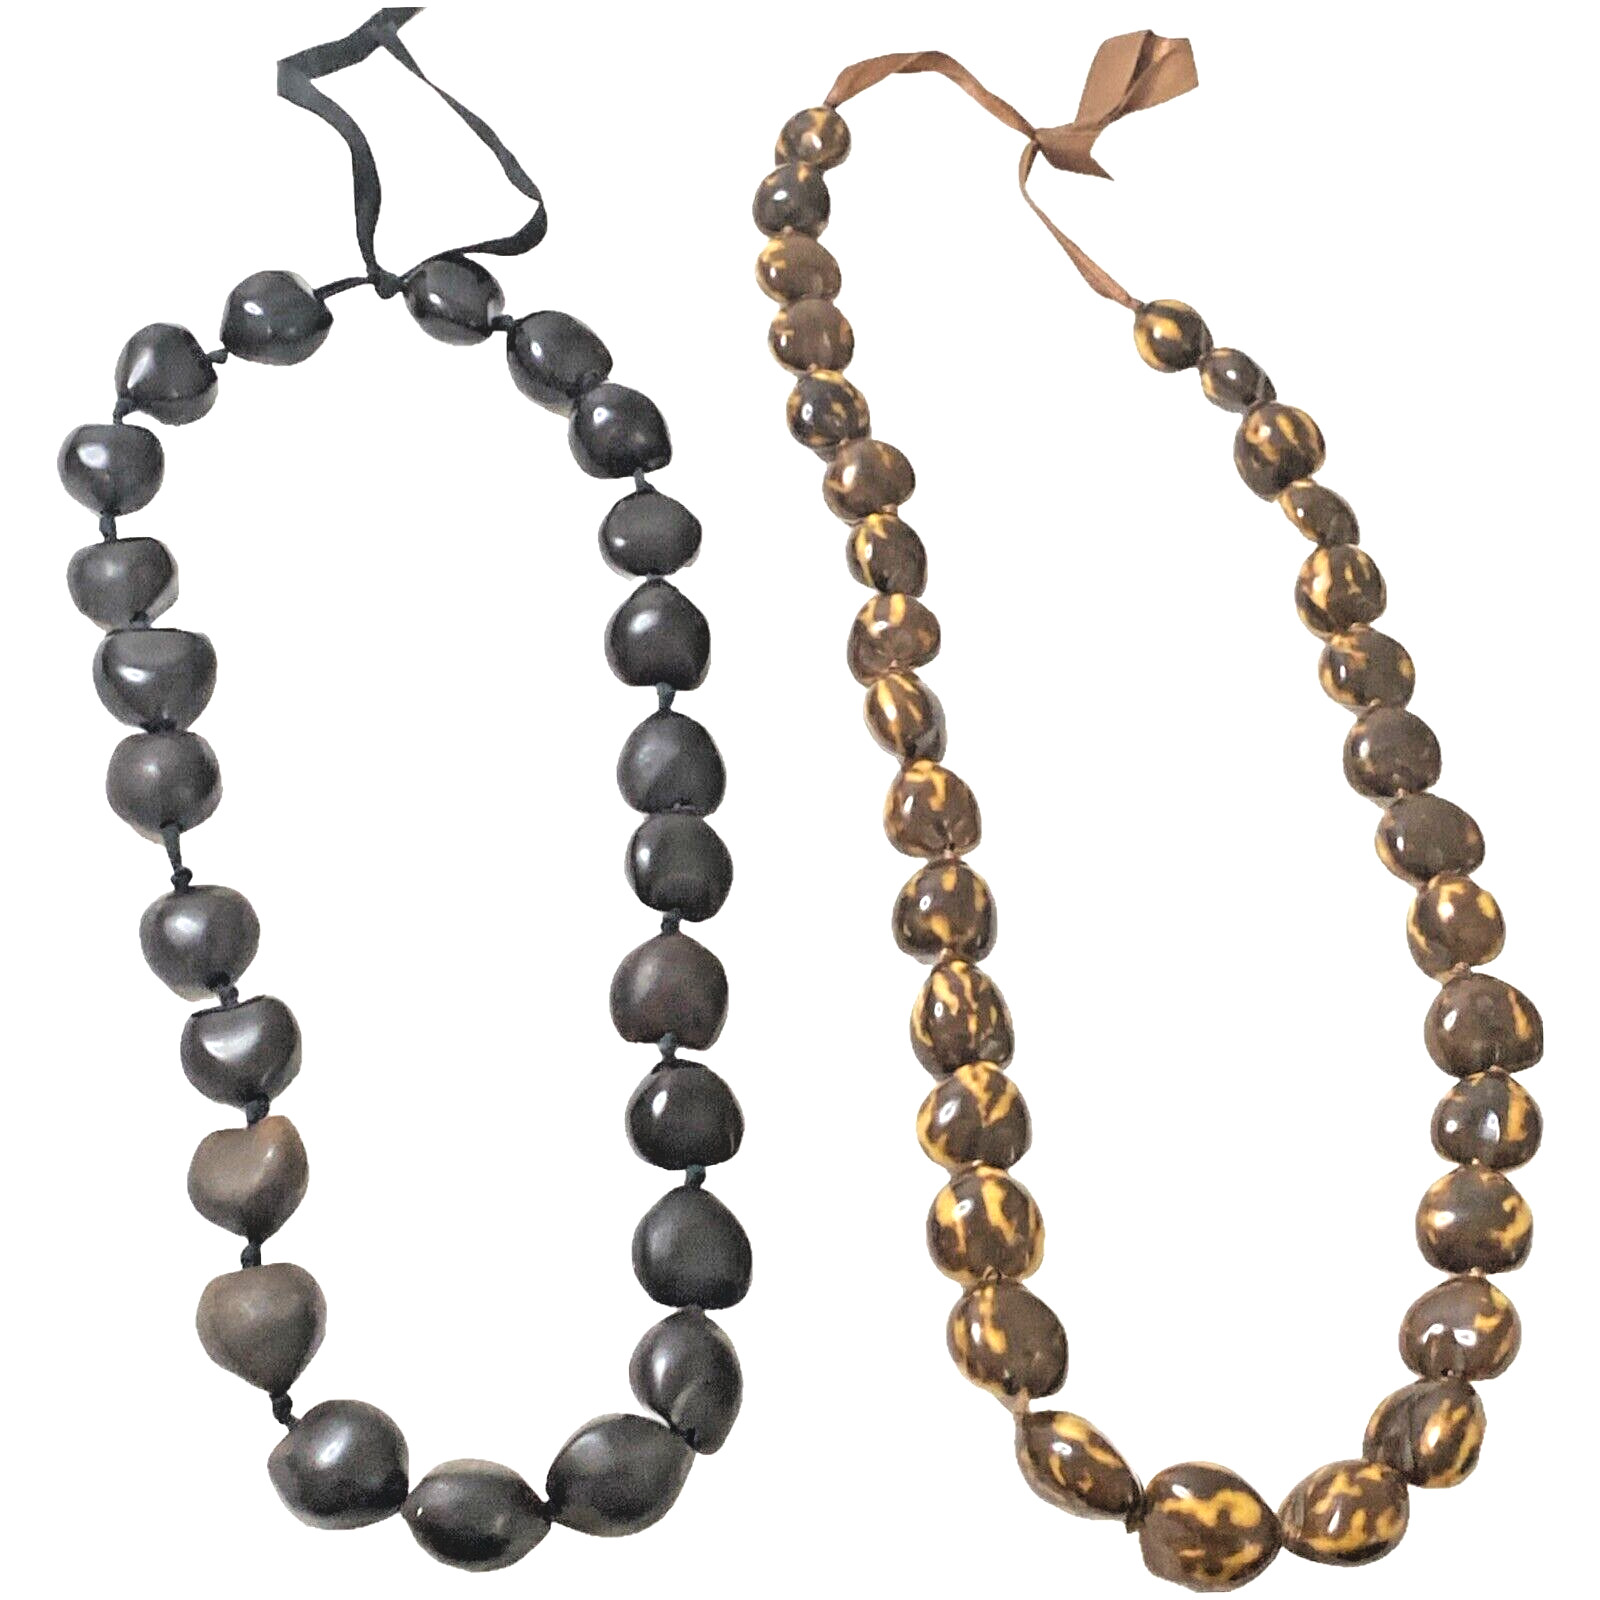 2 Vintage Hawaiian Lei Kukui Nut Brown/Black Necklace Long, Strung On Ribbon